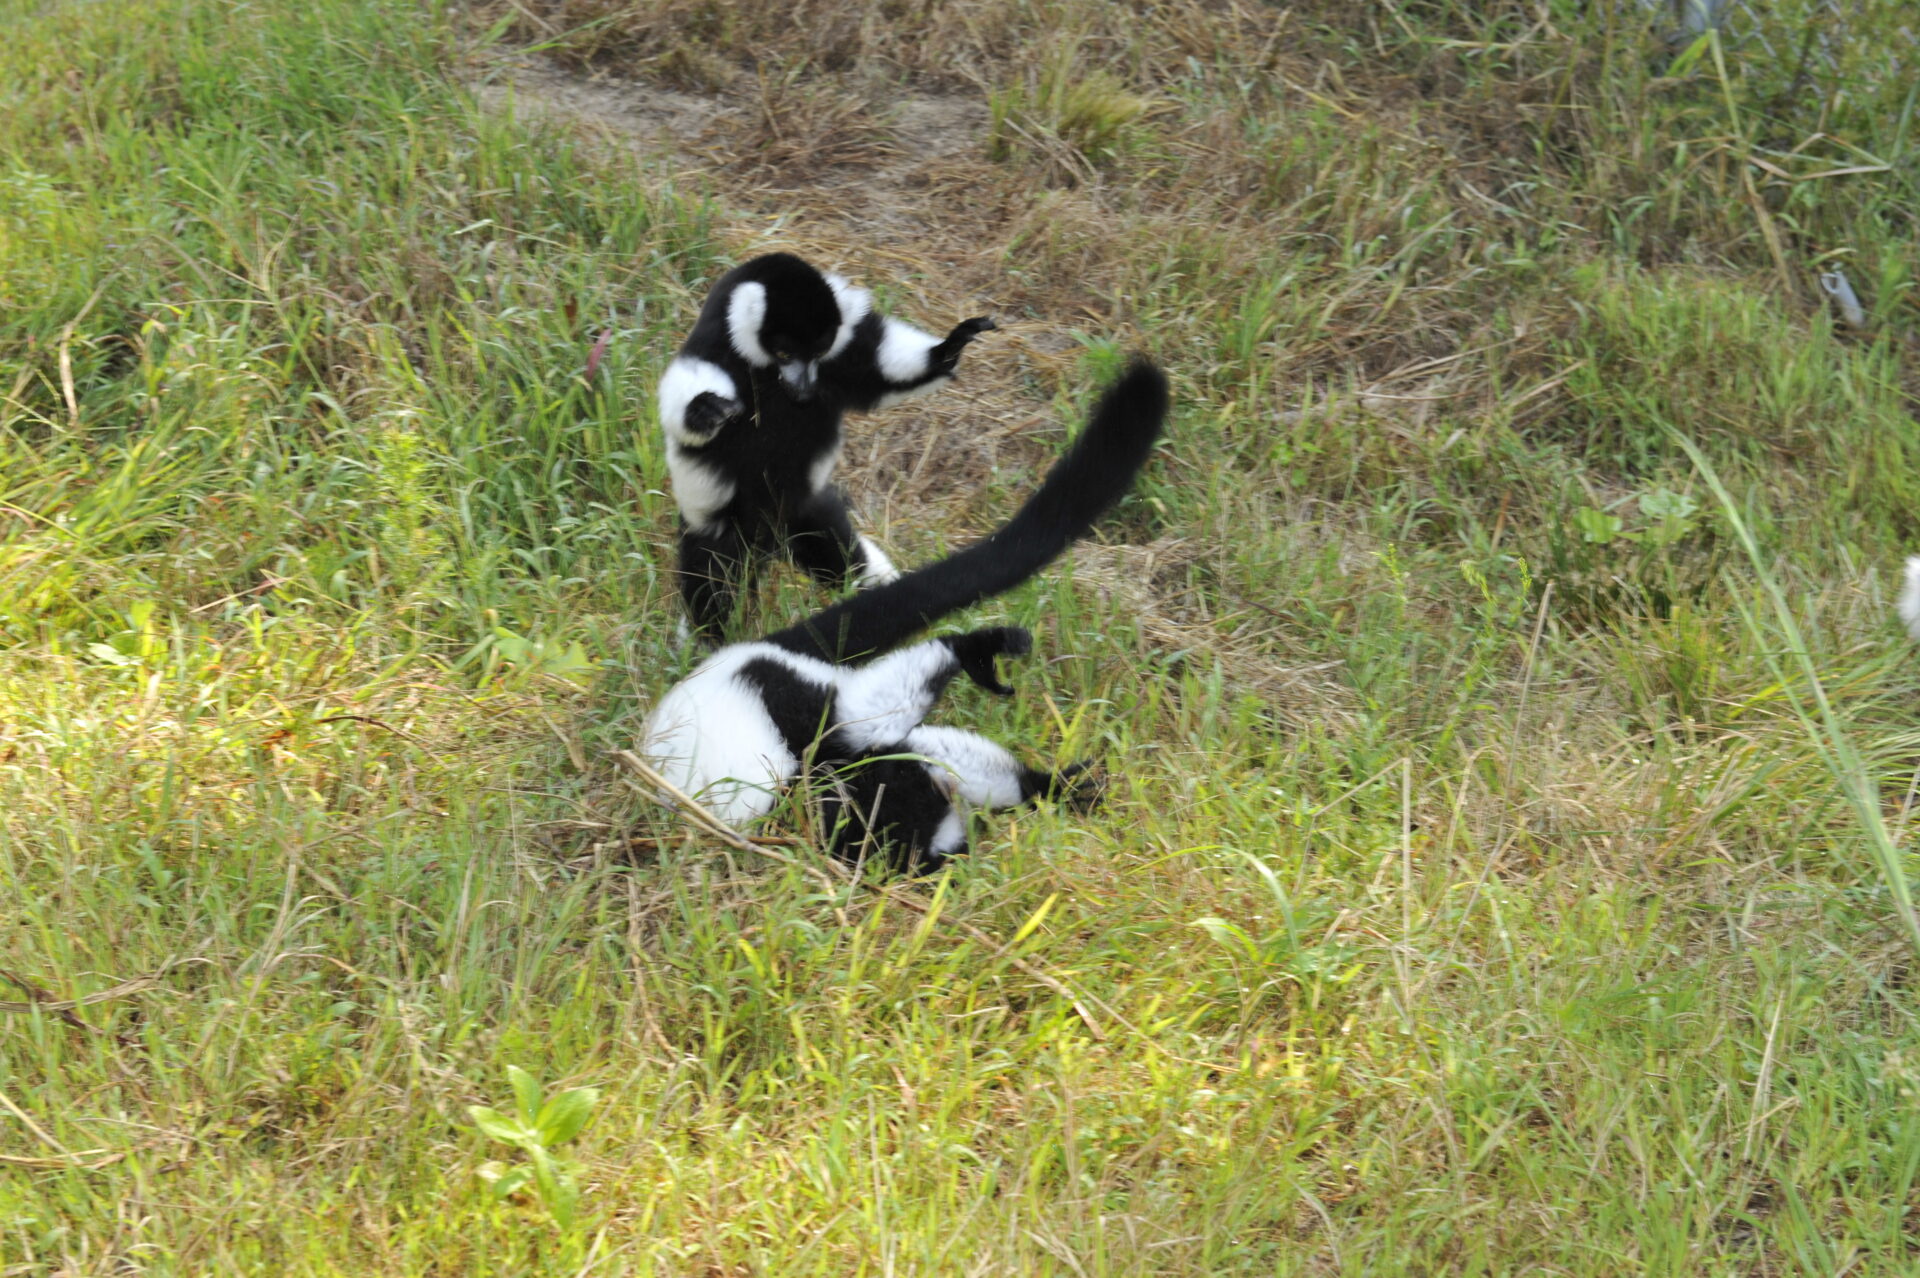 young ruffed lemurs playing